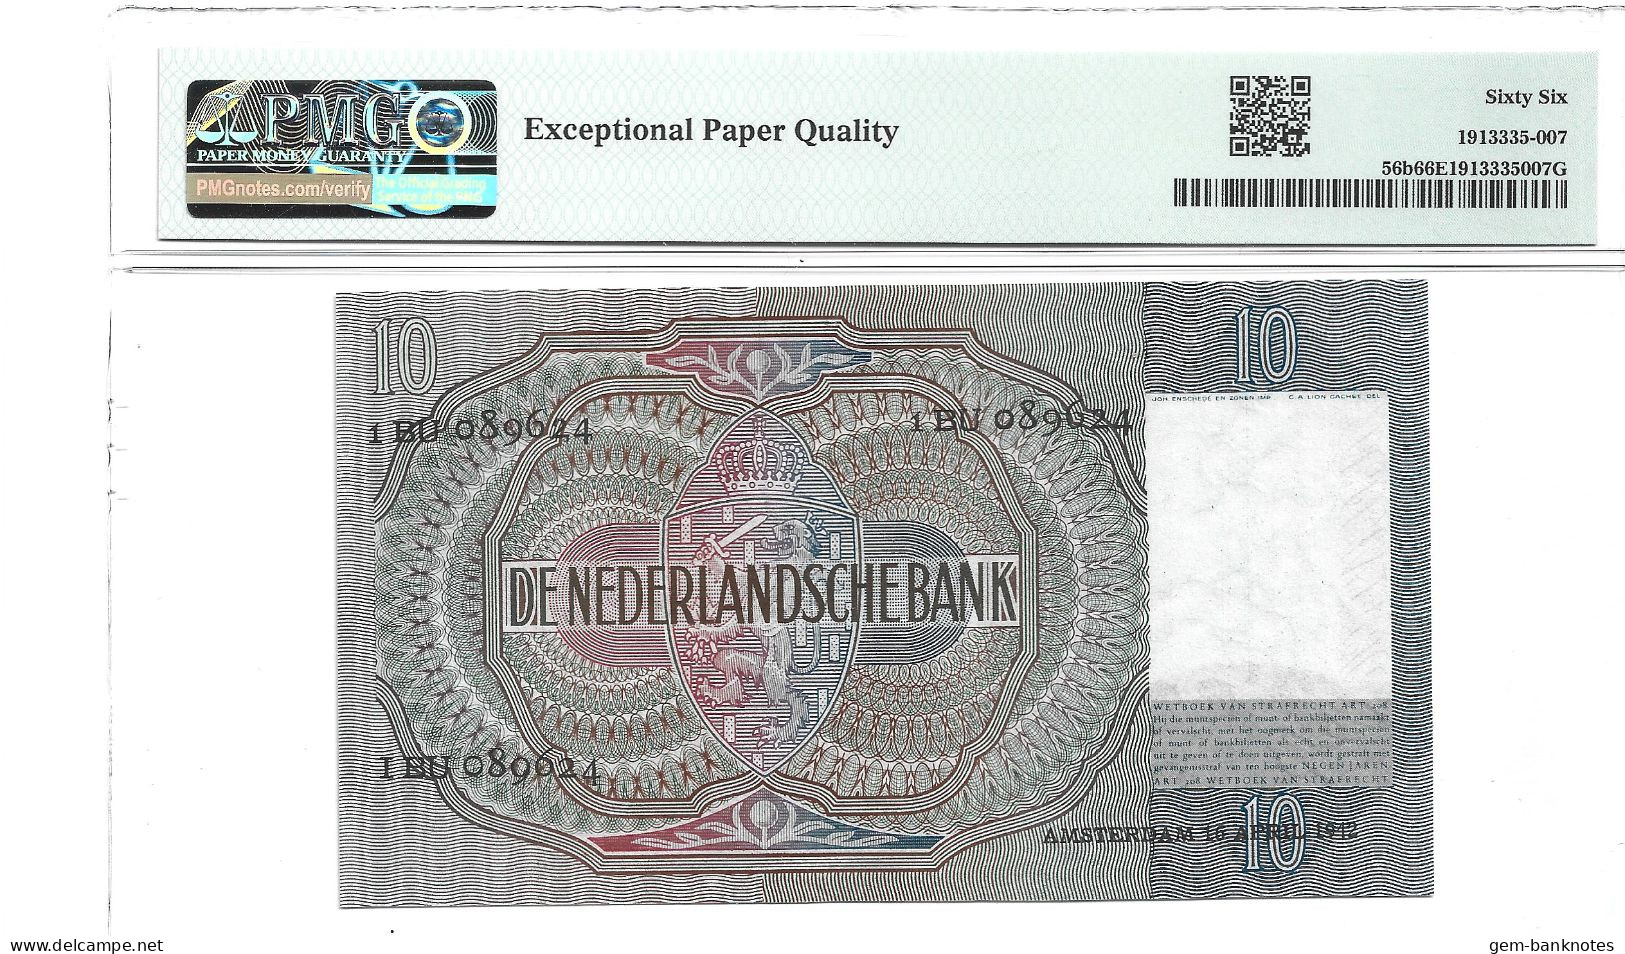 Netherlands 10 Gulden 1941-42 P56b Graded 66 EPQ Gem Uncirculated By PMG - 10 Gulden